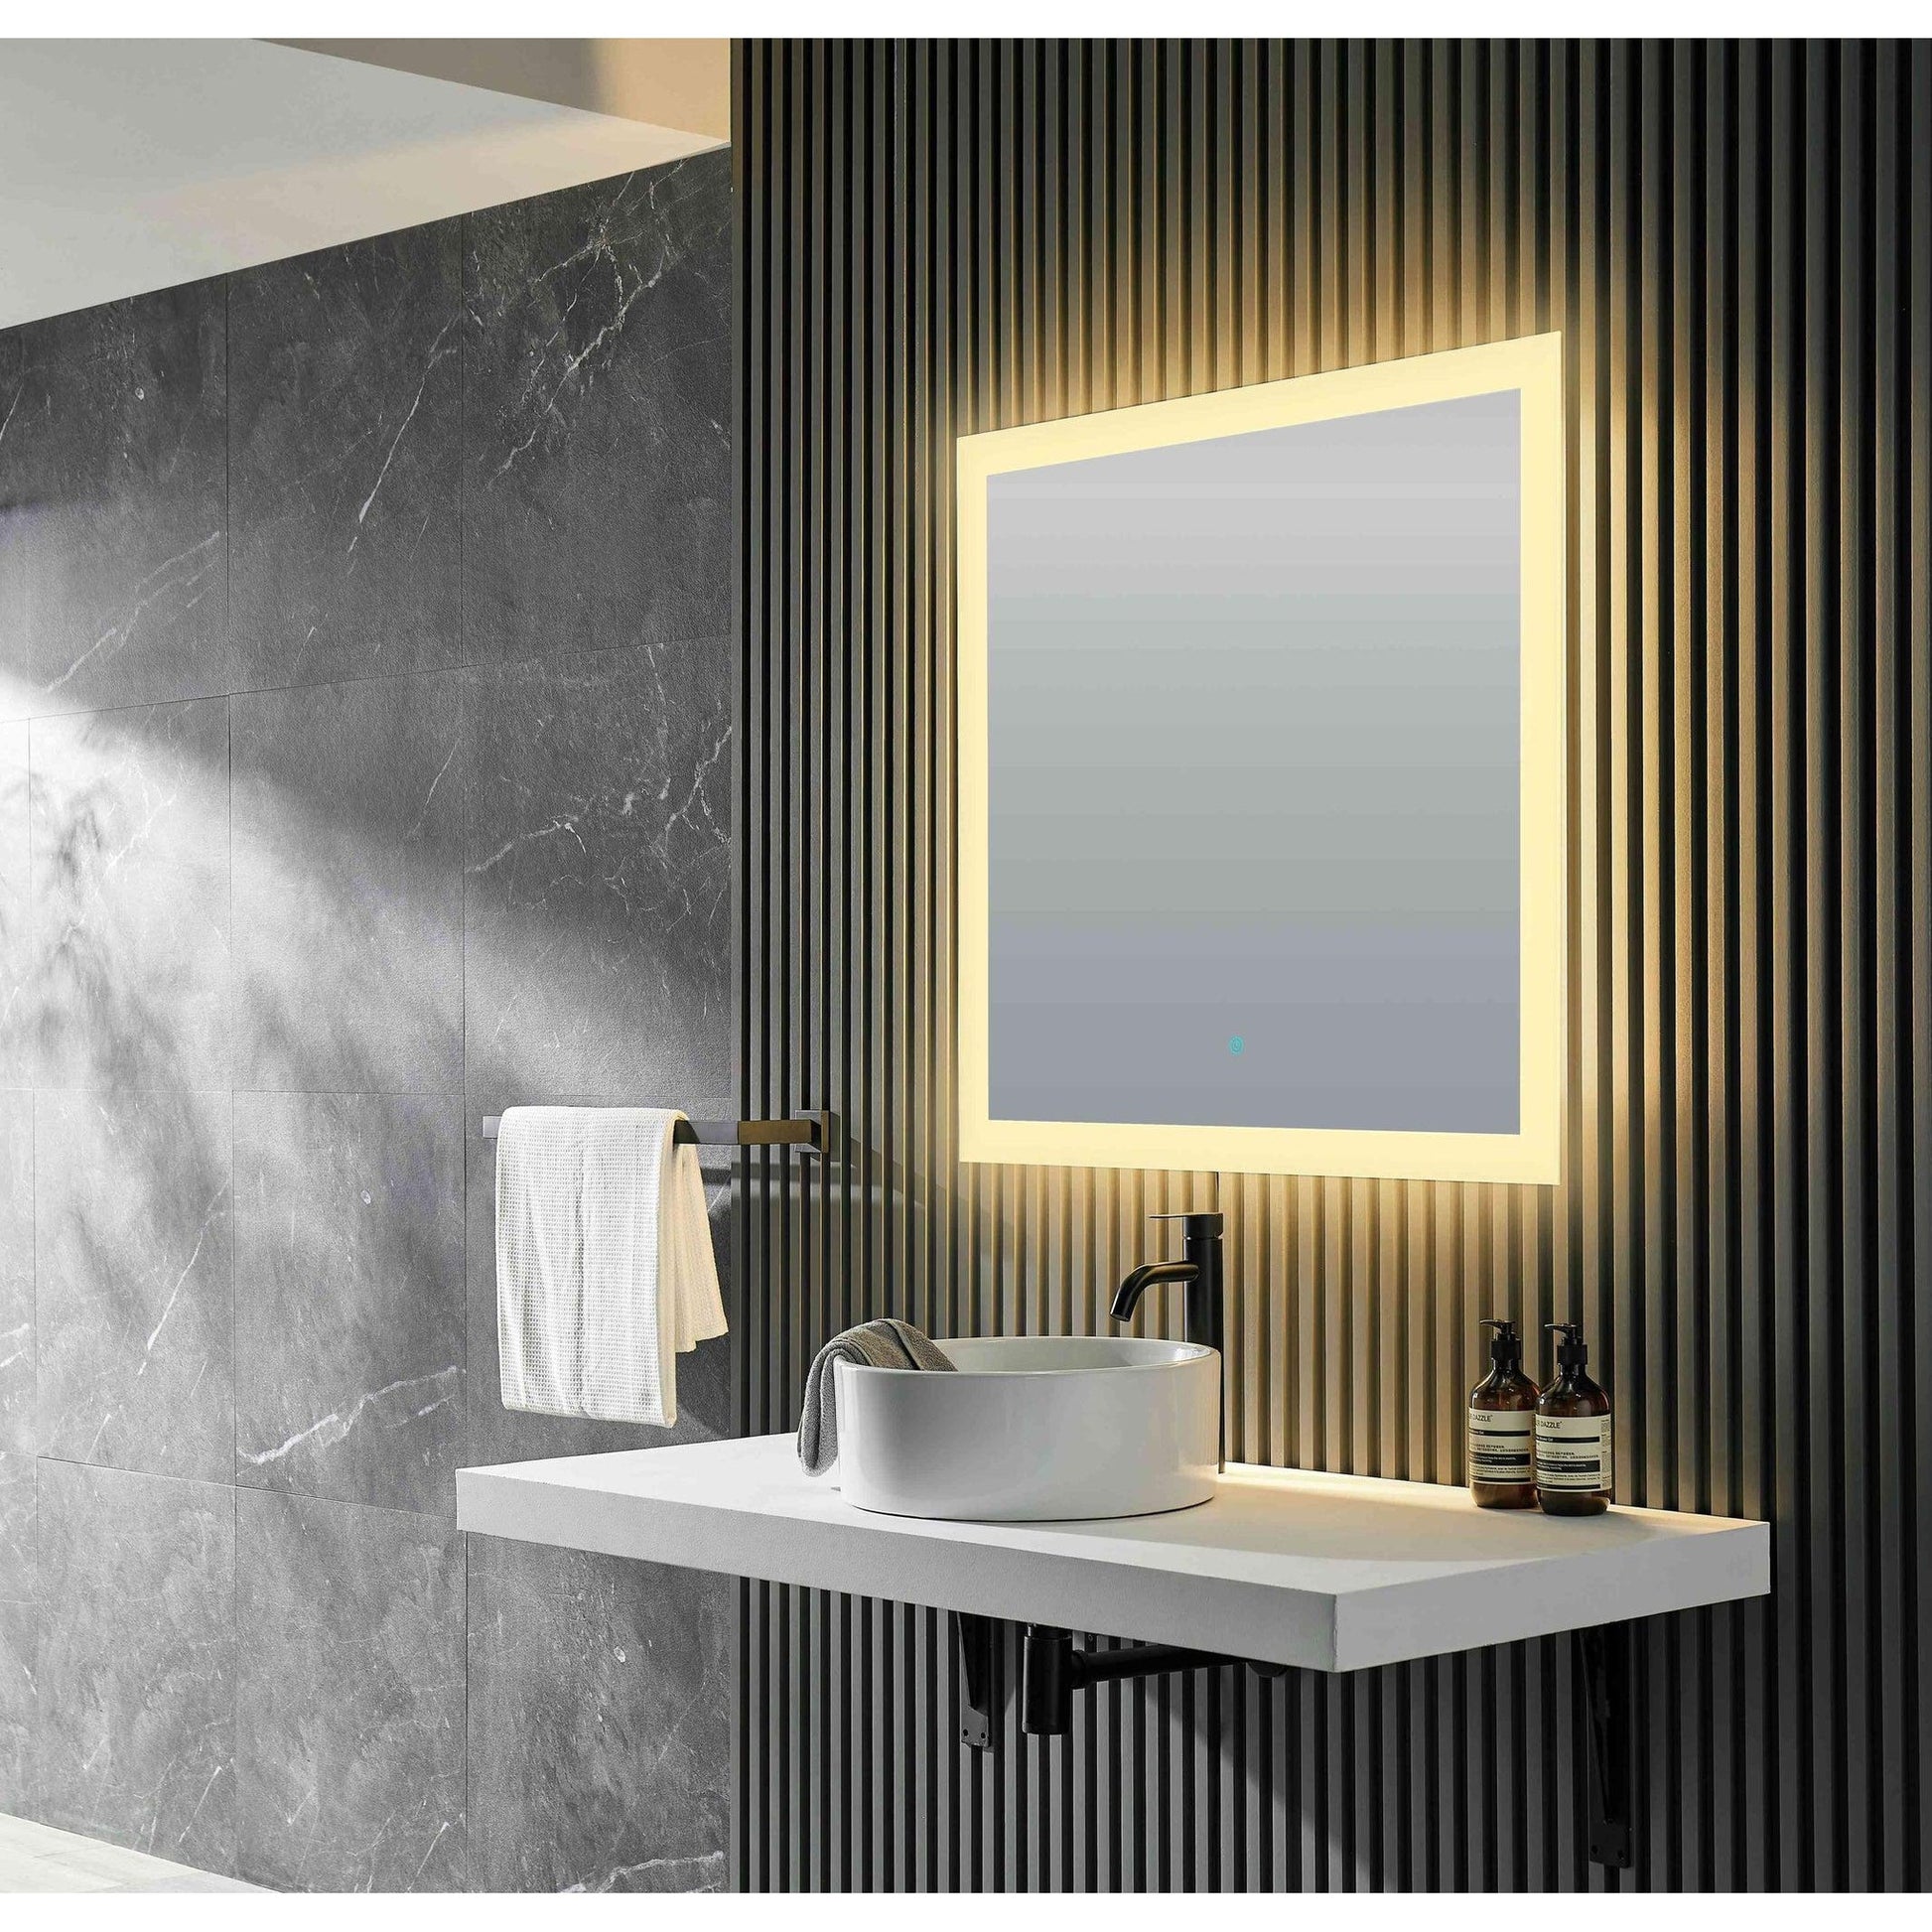 ANZZI Mars Series 32" x 30" Frameless Led Bathroom Mirror With Built-In Defogger